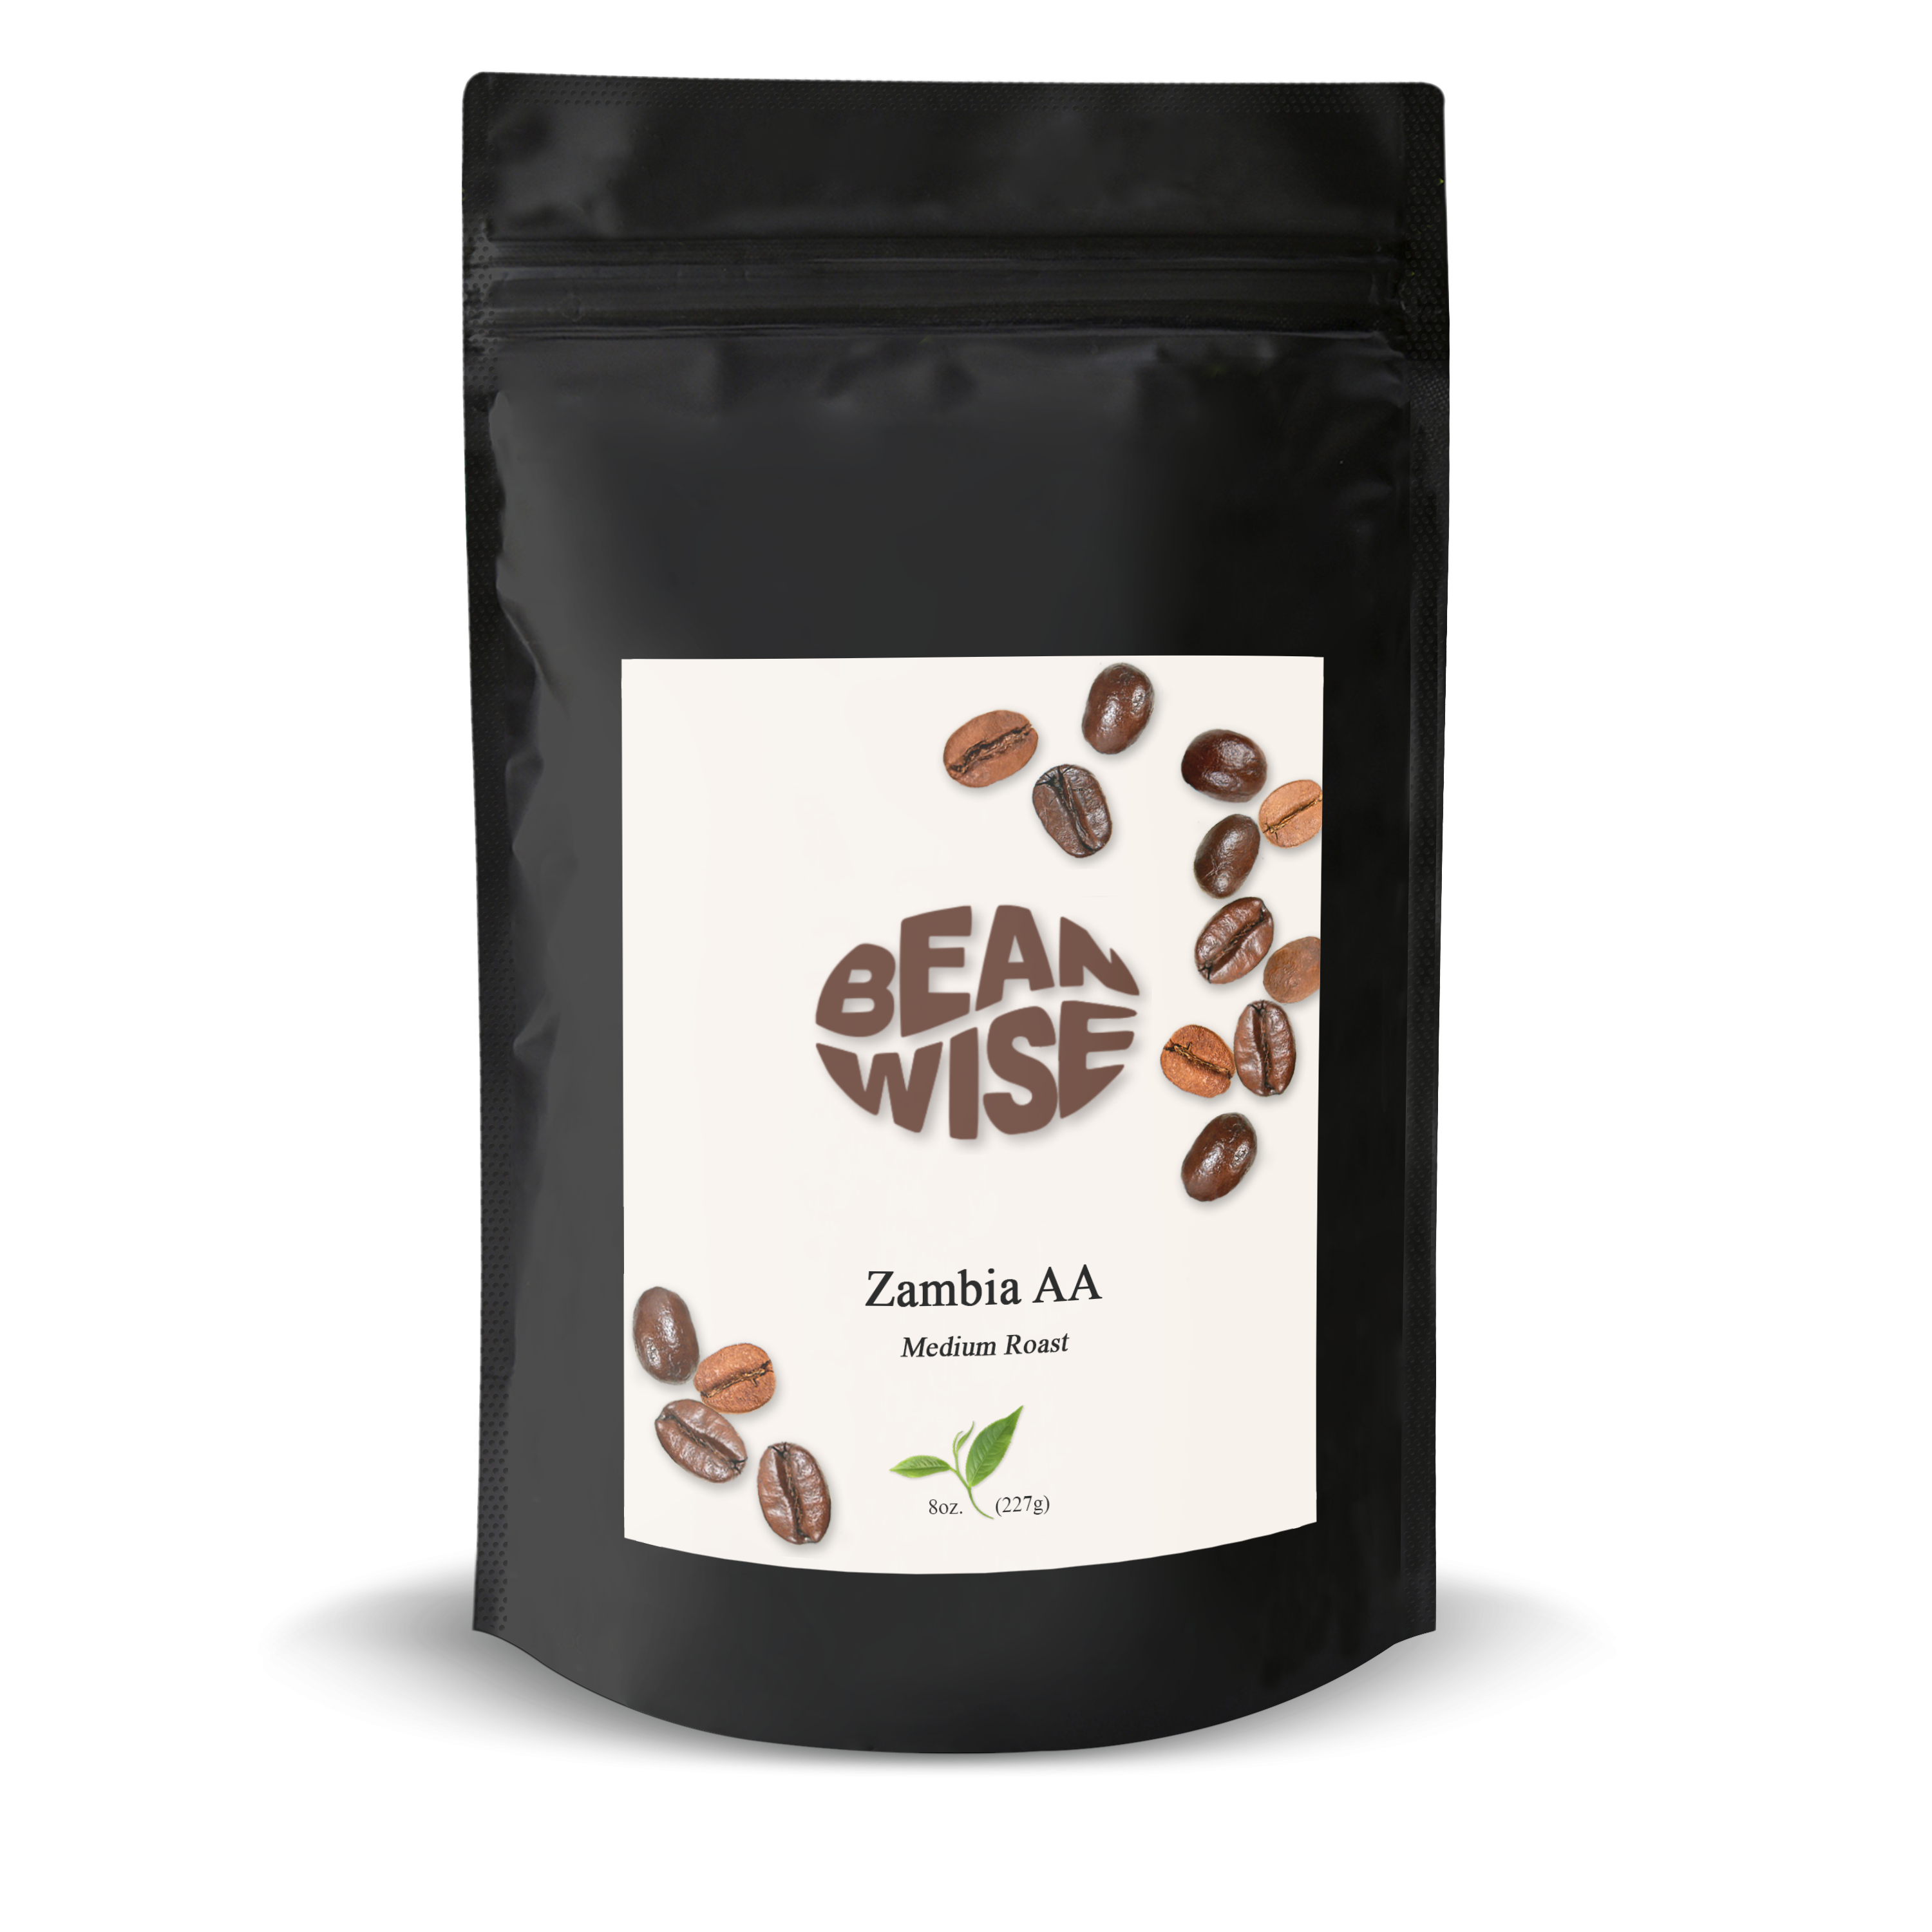 Zambia AA Coffee Beans